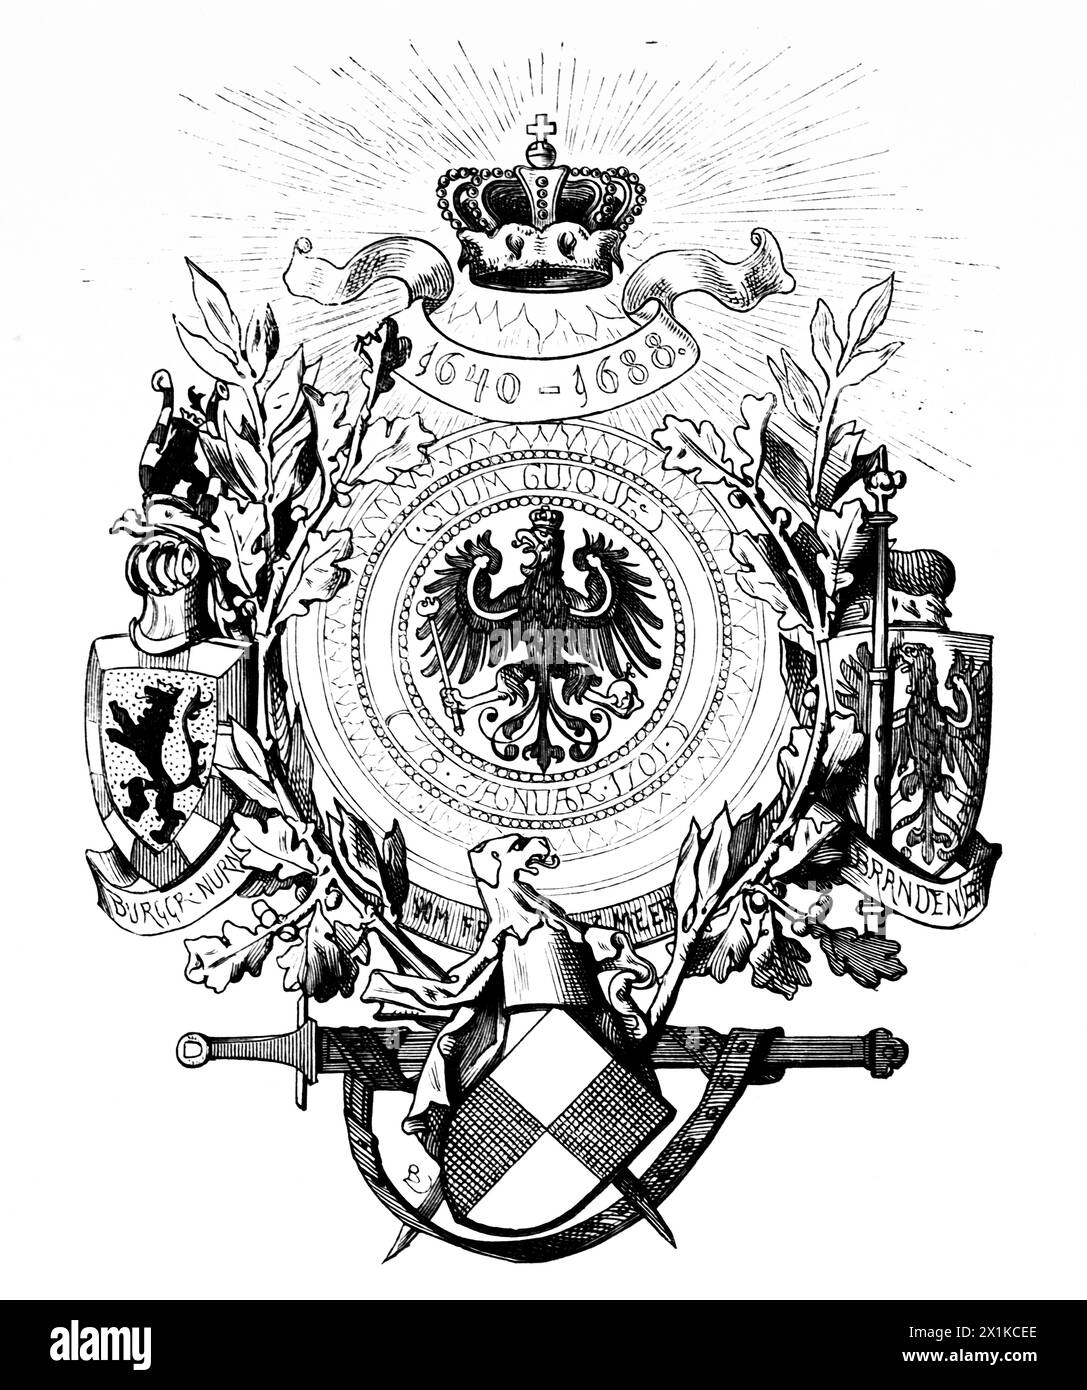 Emblemand motto 'Suum quique'  of Friedrich Wilhelm, The Great Elector, of Brandenburg, historic illustration 1880 Stock Photo